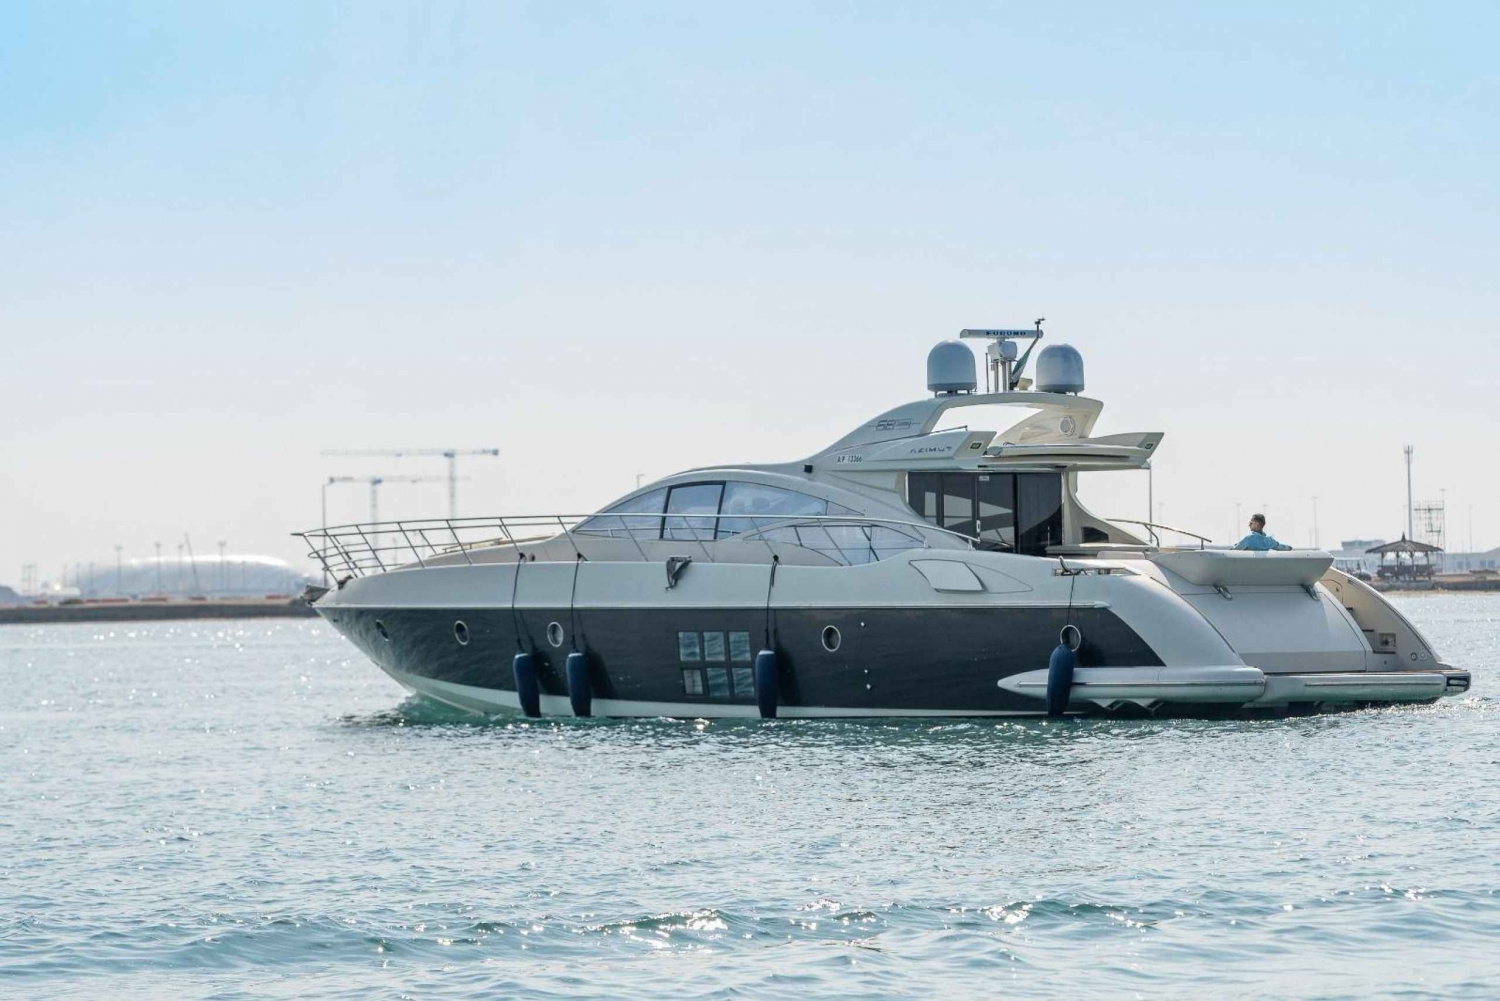 Abu Dhabi Yacht Charter: Cruise, Swim, Sightsee